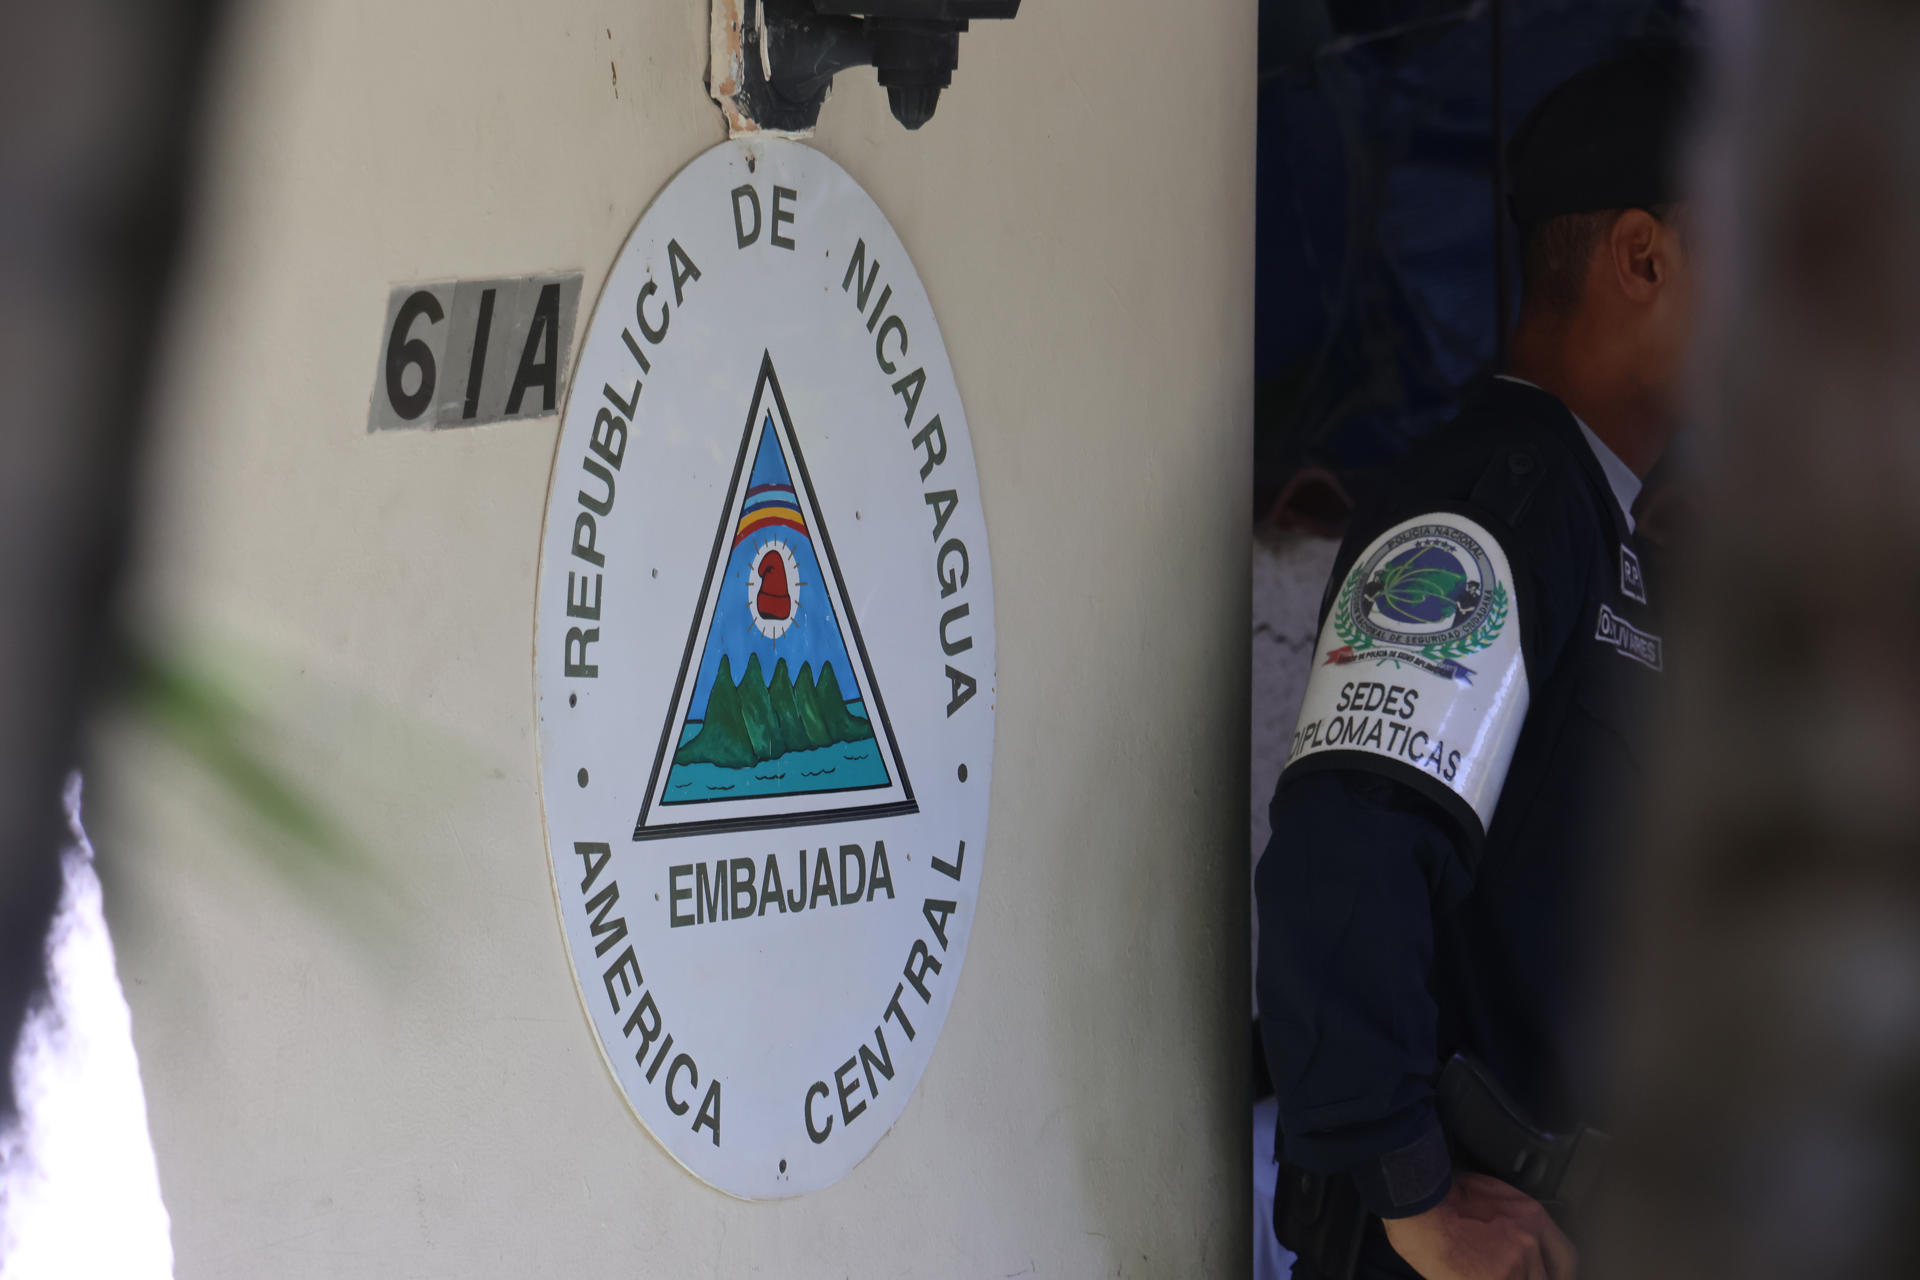 Al otorgar asilo a Martinelli, Nicaragua “subvierte la justicia”, declara EE UU